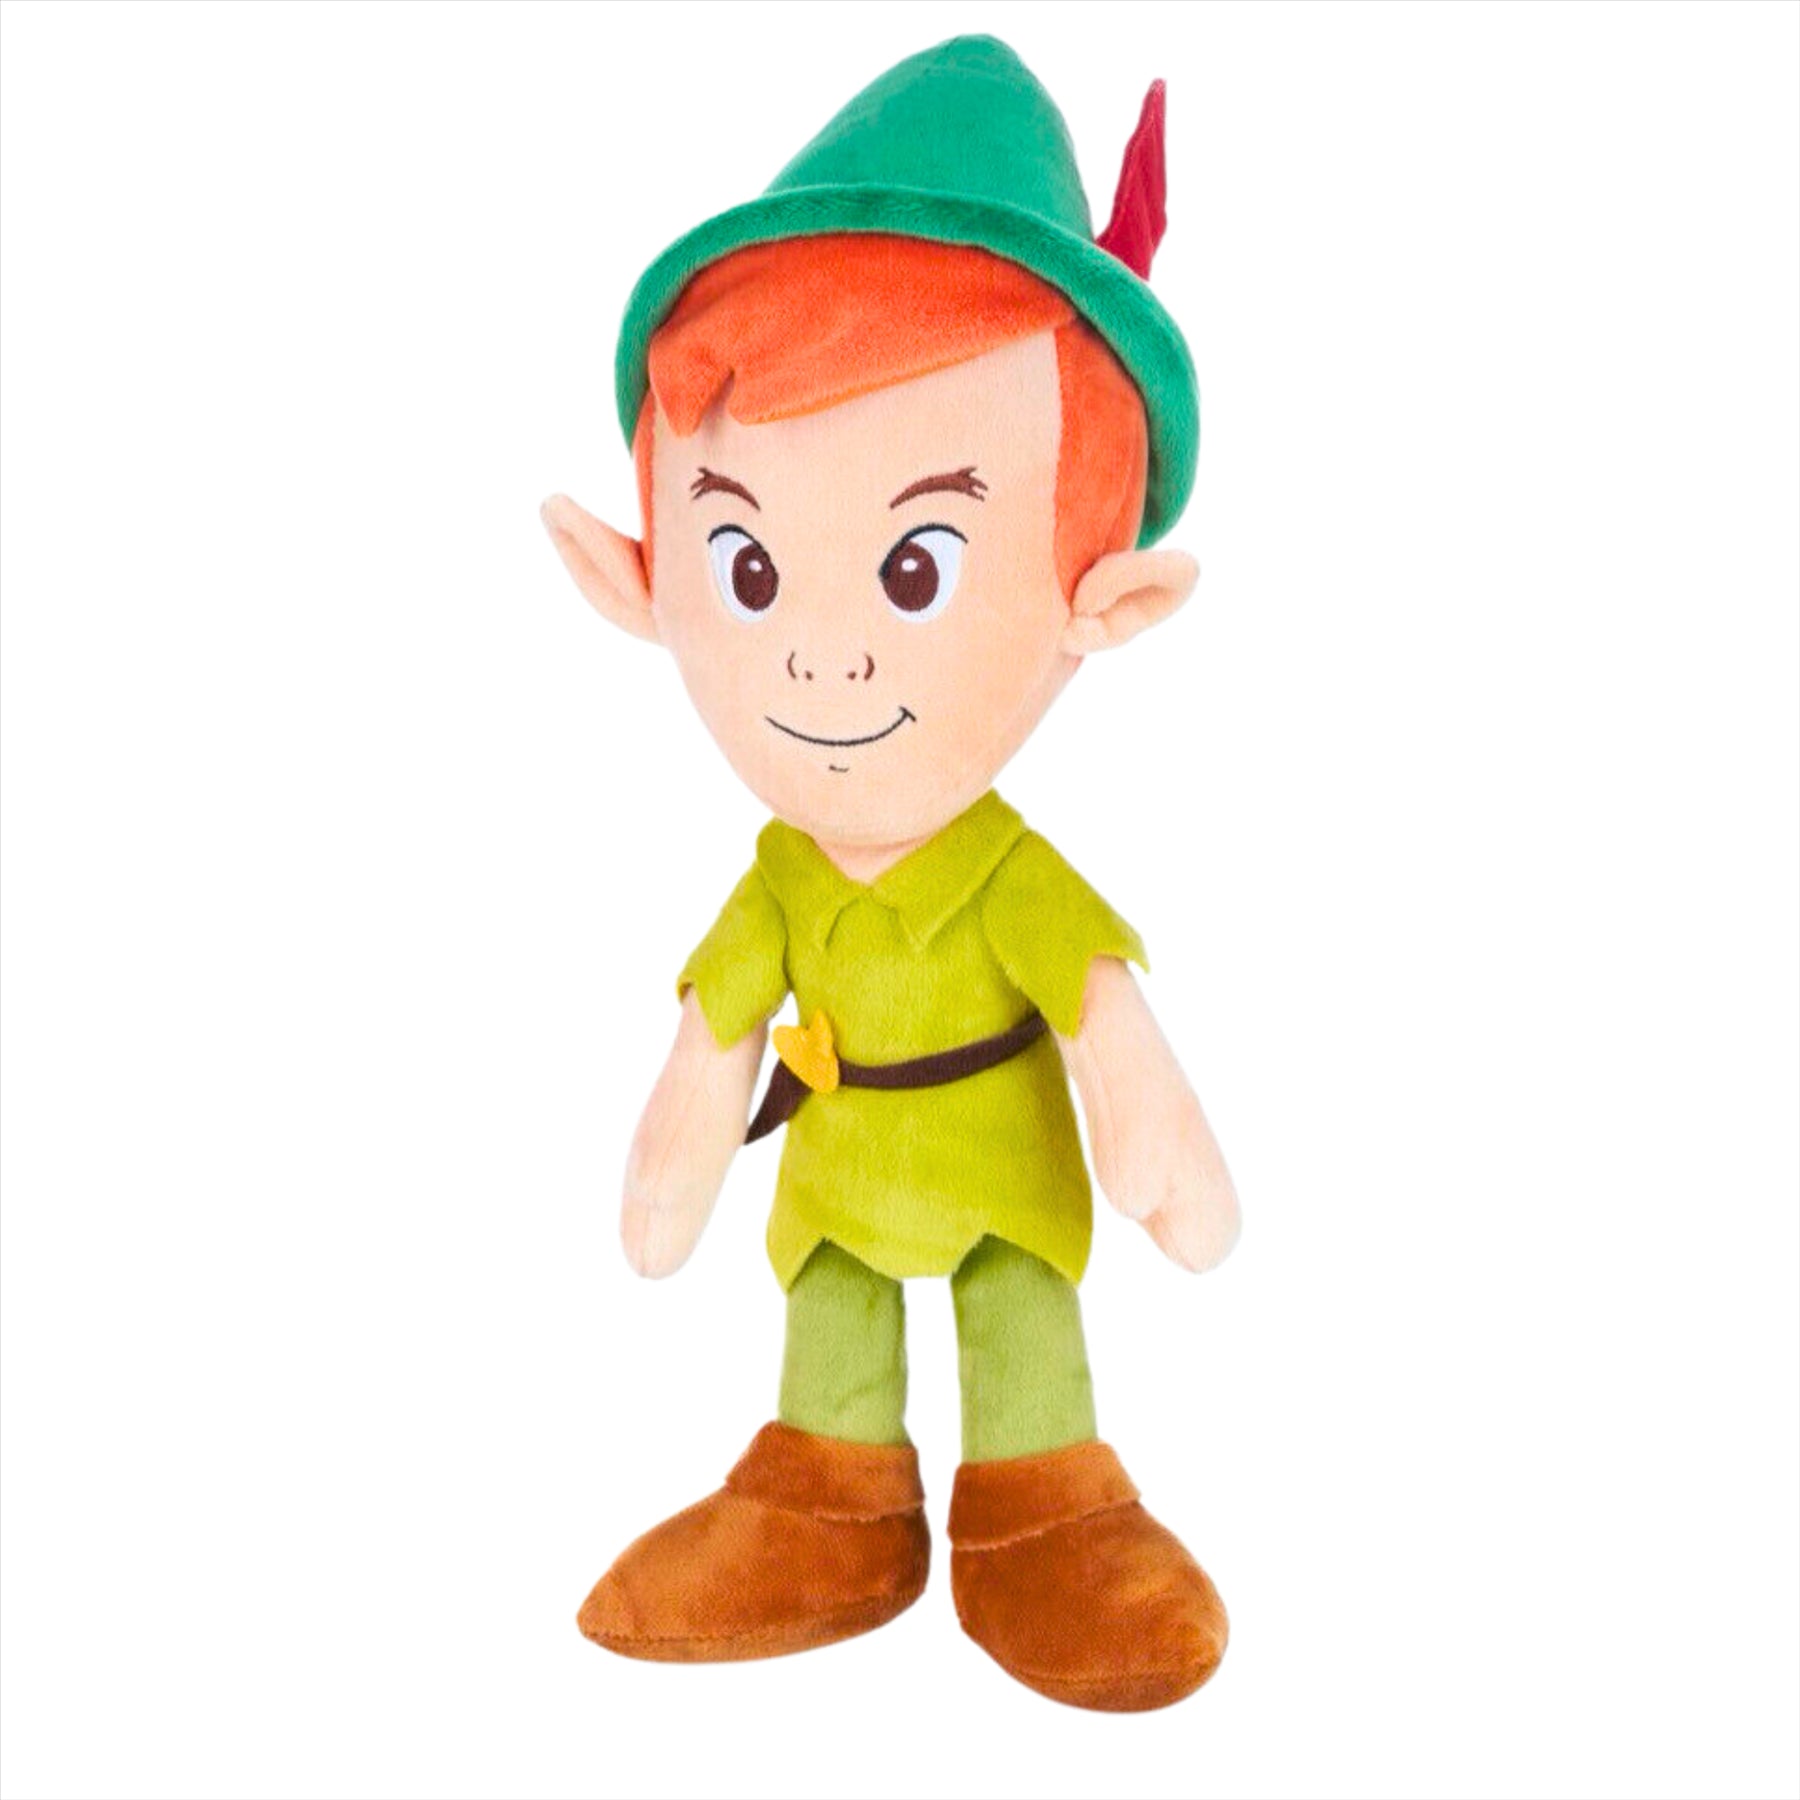 Disney Peter Pan Super Soft Plush Toy Figure 34cm